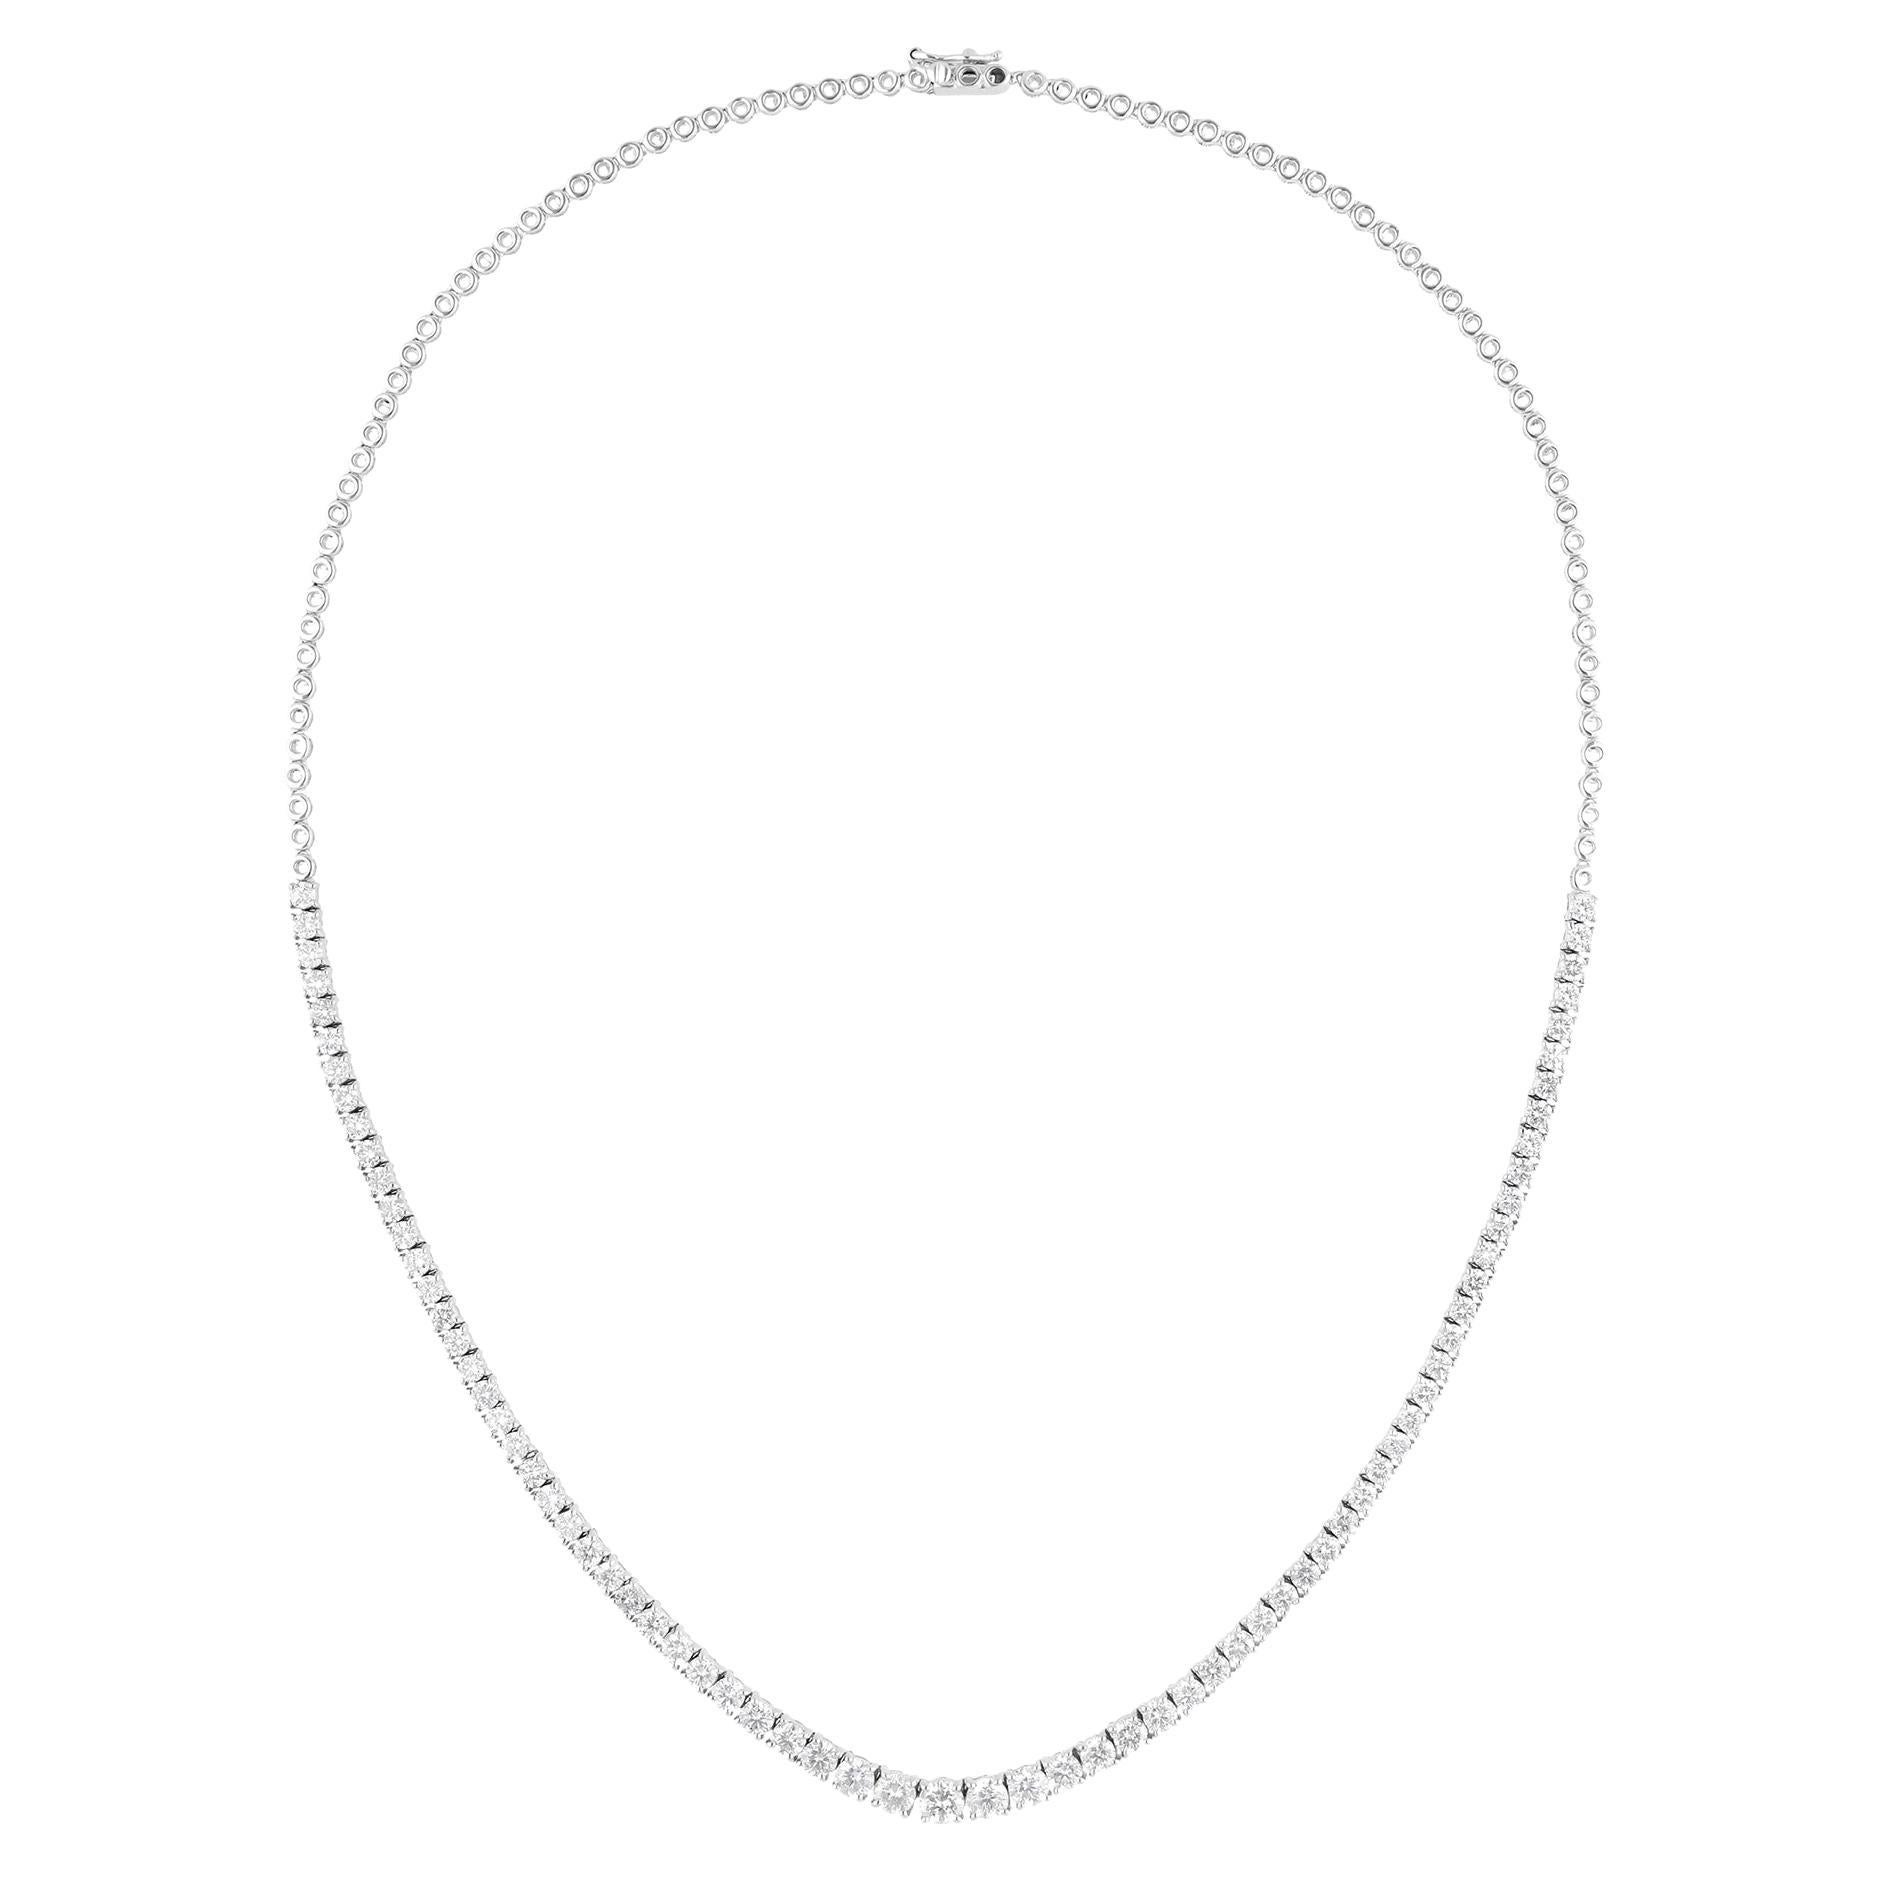 Natural 5.25 Carat Round Diamond Chain Necklace 18 Karat White Gold Fine Jewelry For Sale